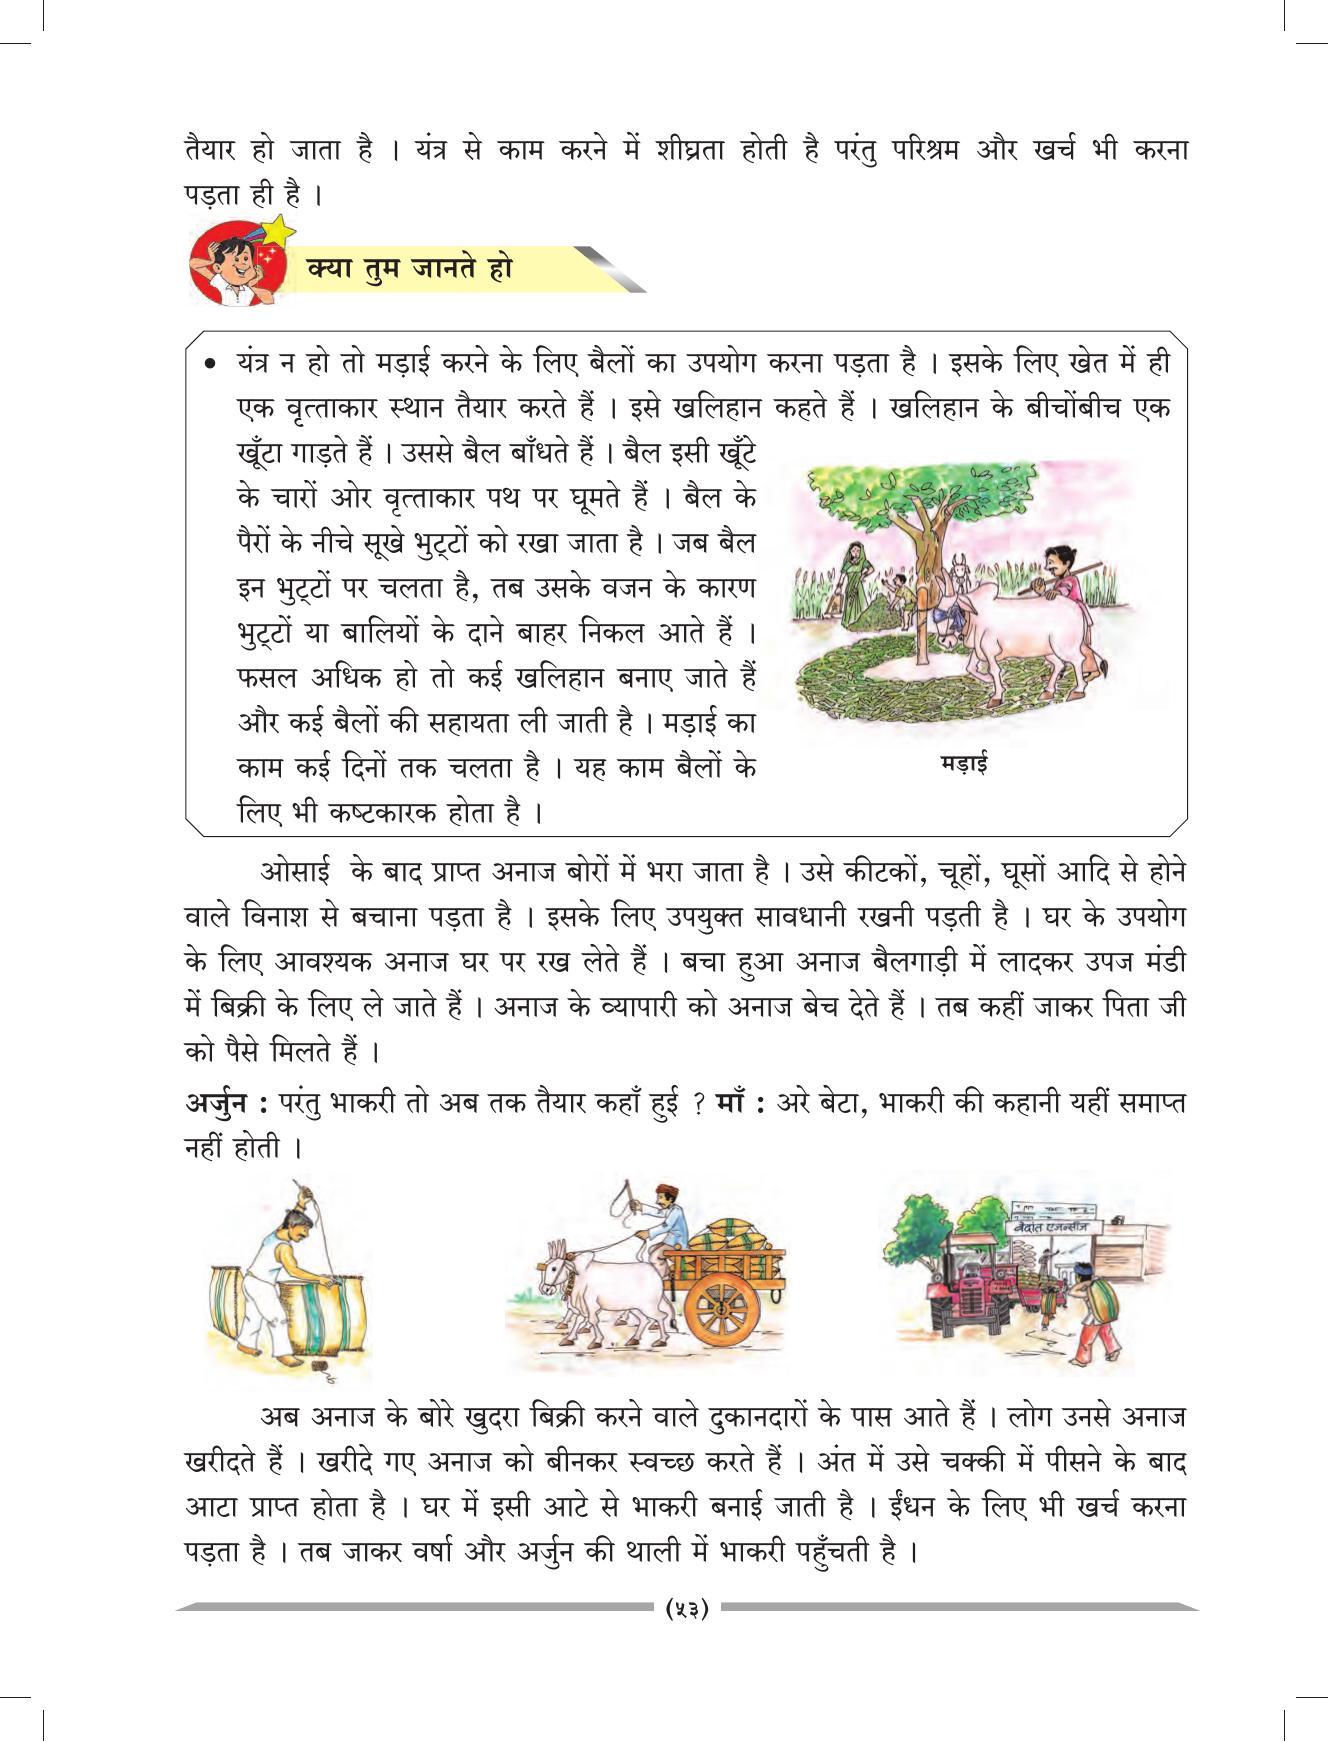 Maharashtra Board Class 4 EVS 1 (Hindi Medium) Textbook - Page 63